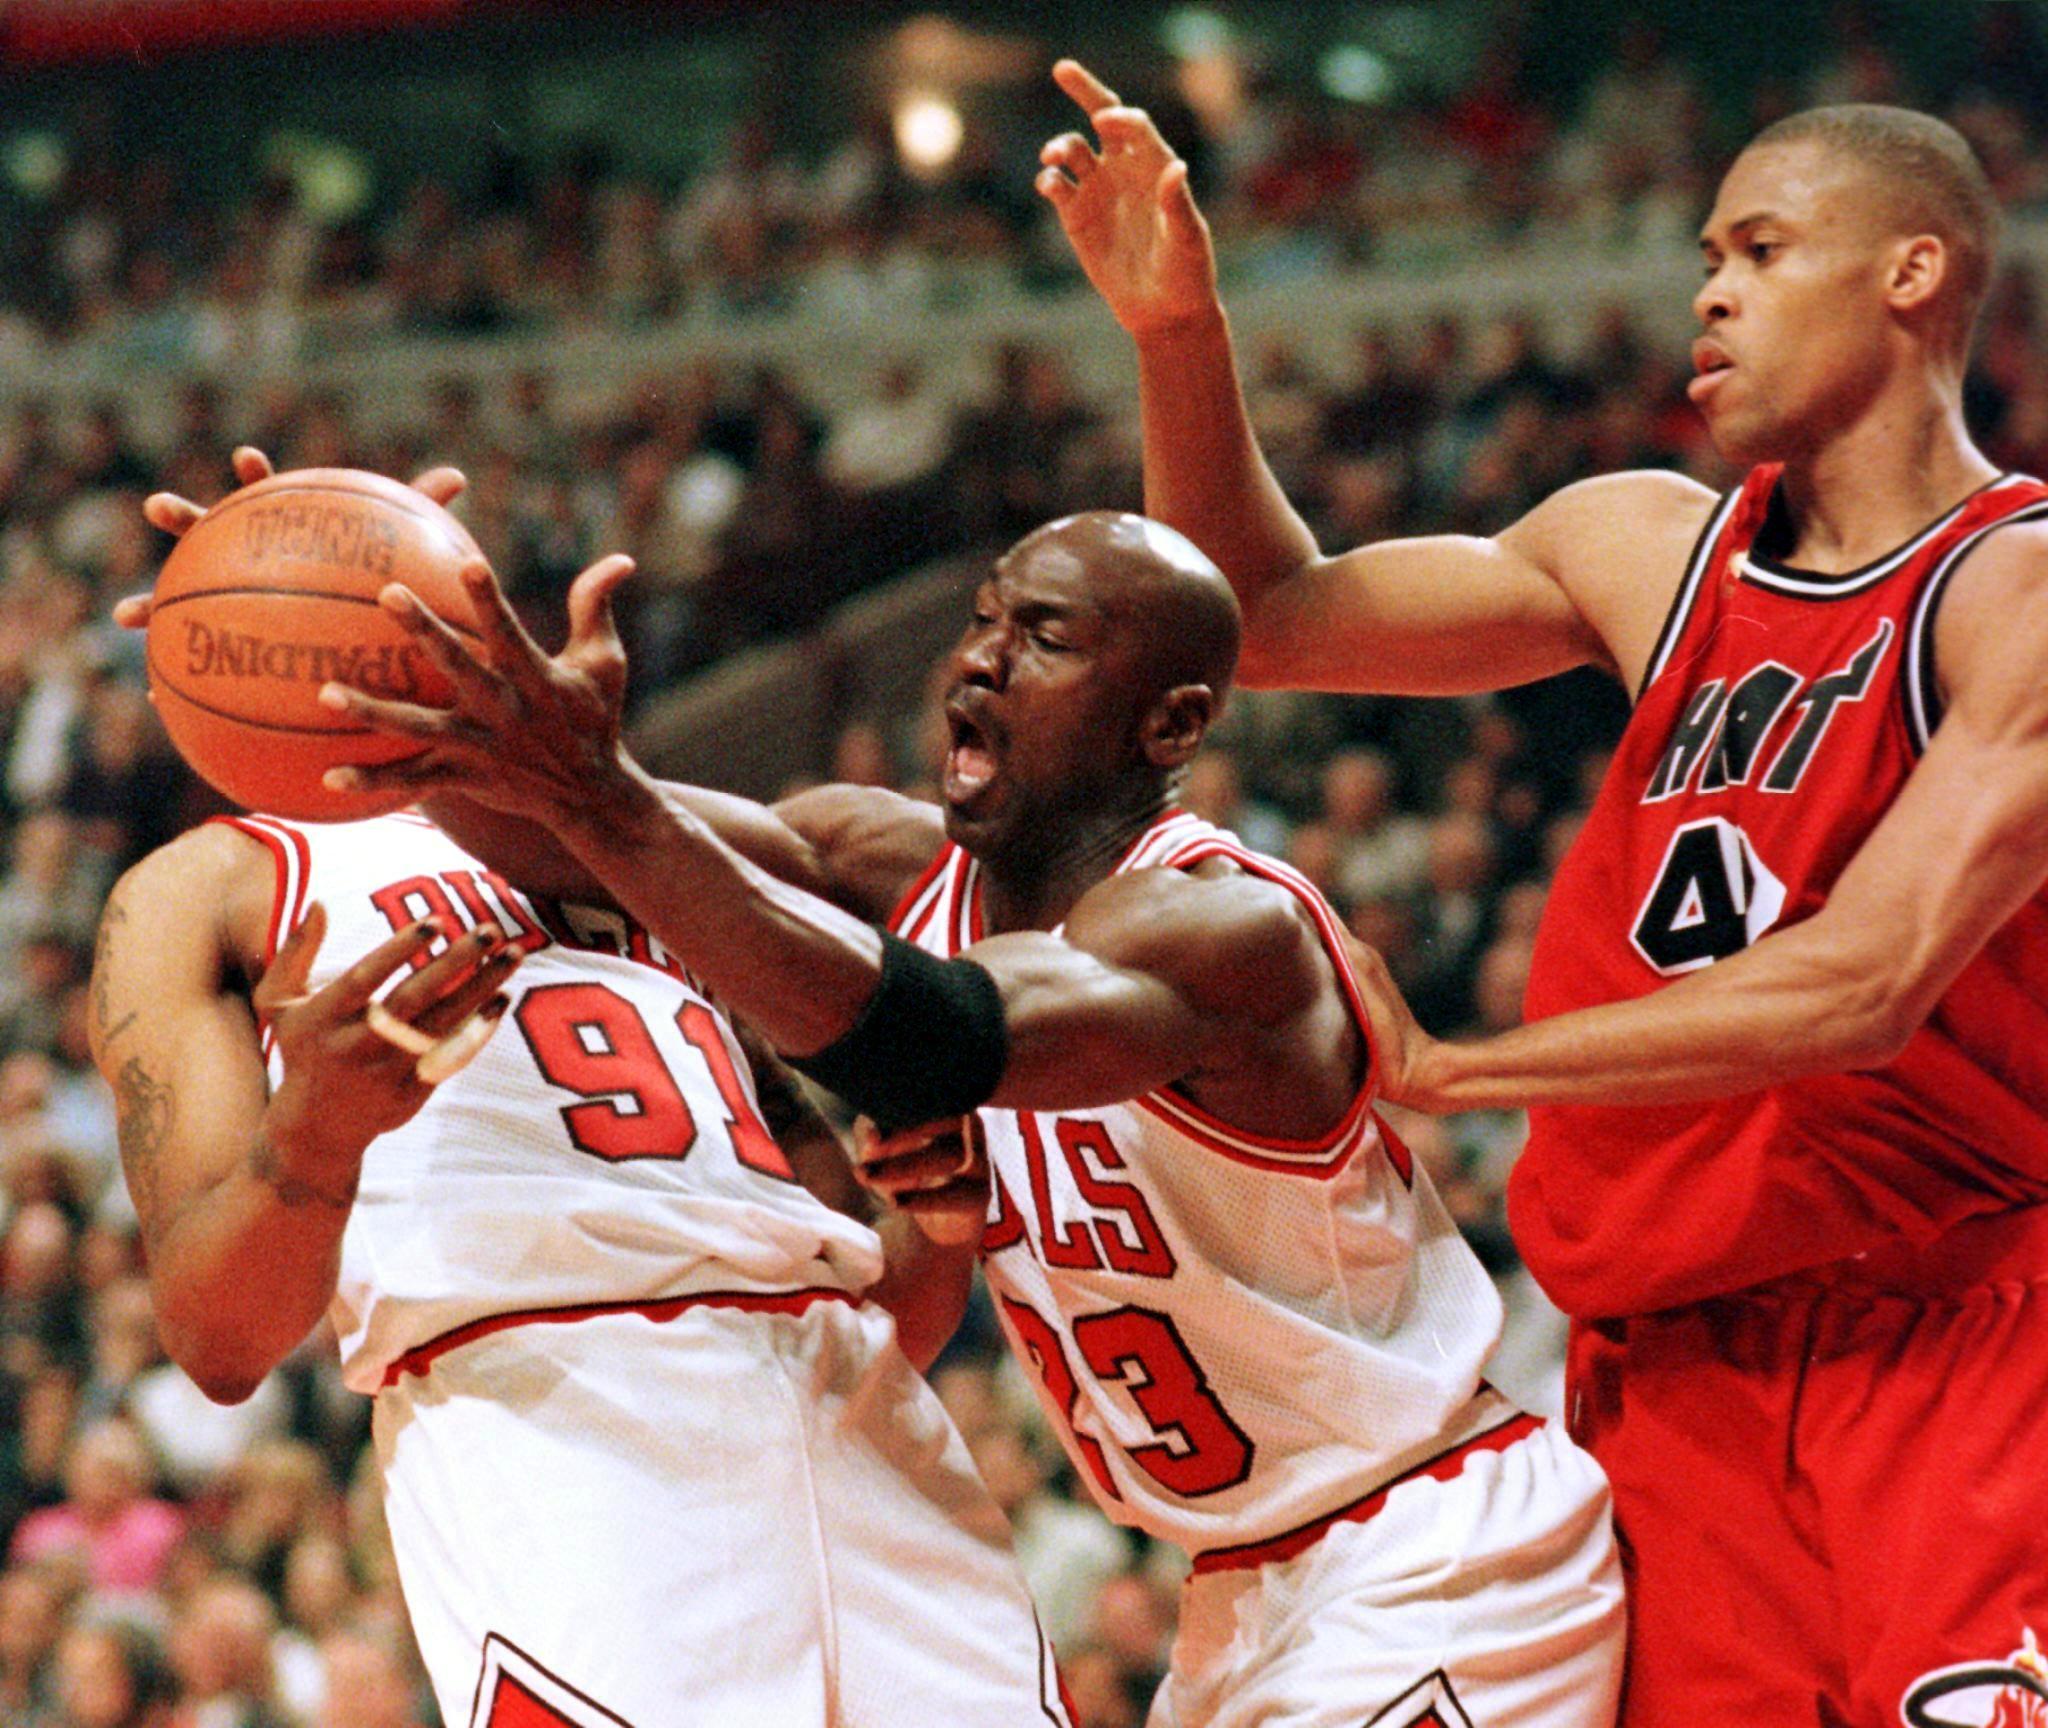 Michael Jordan had quite the competitive fire.